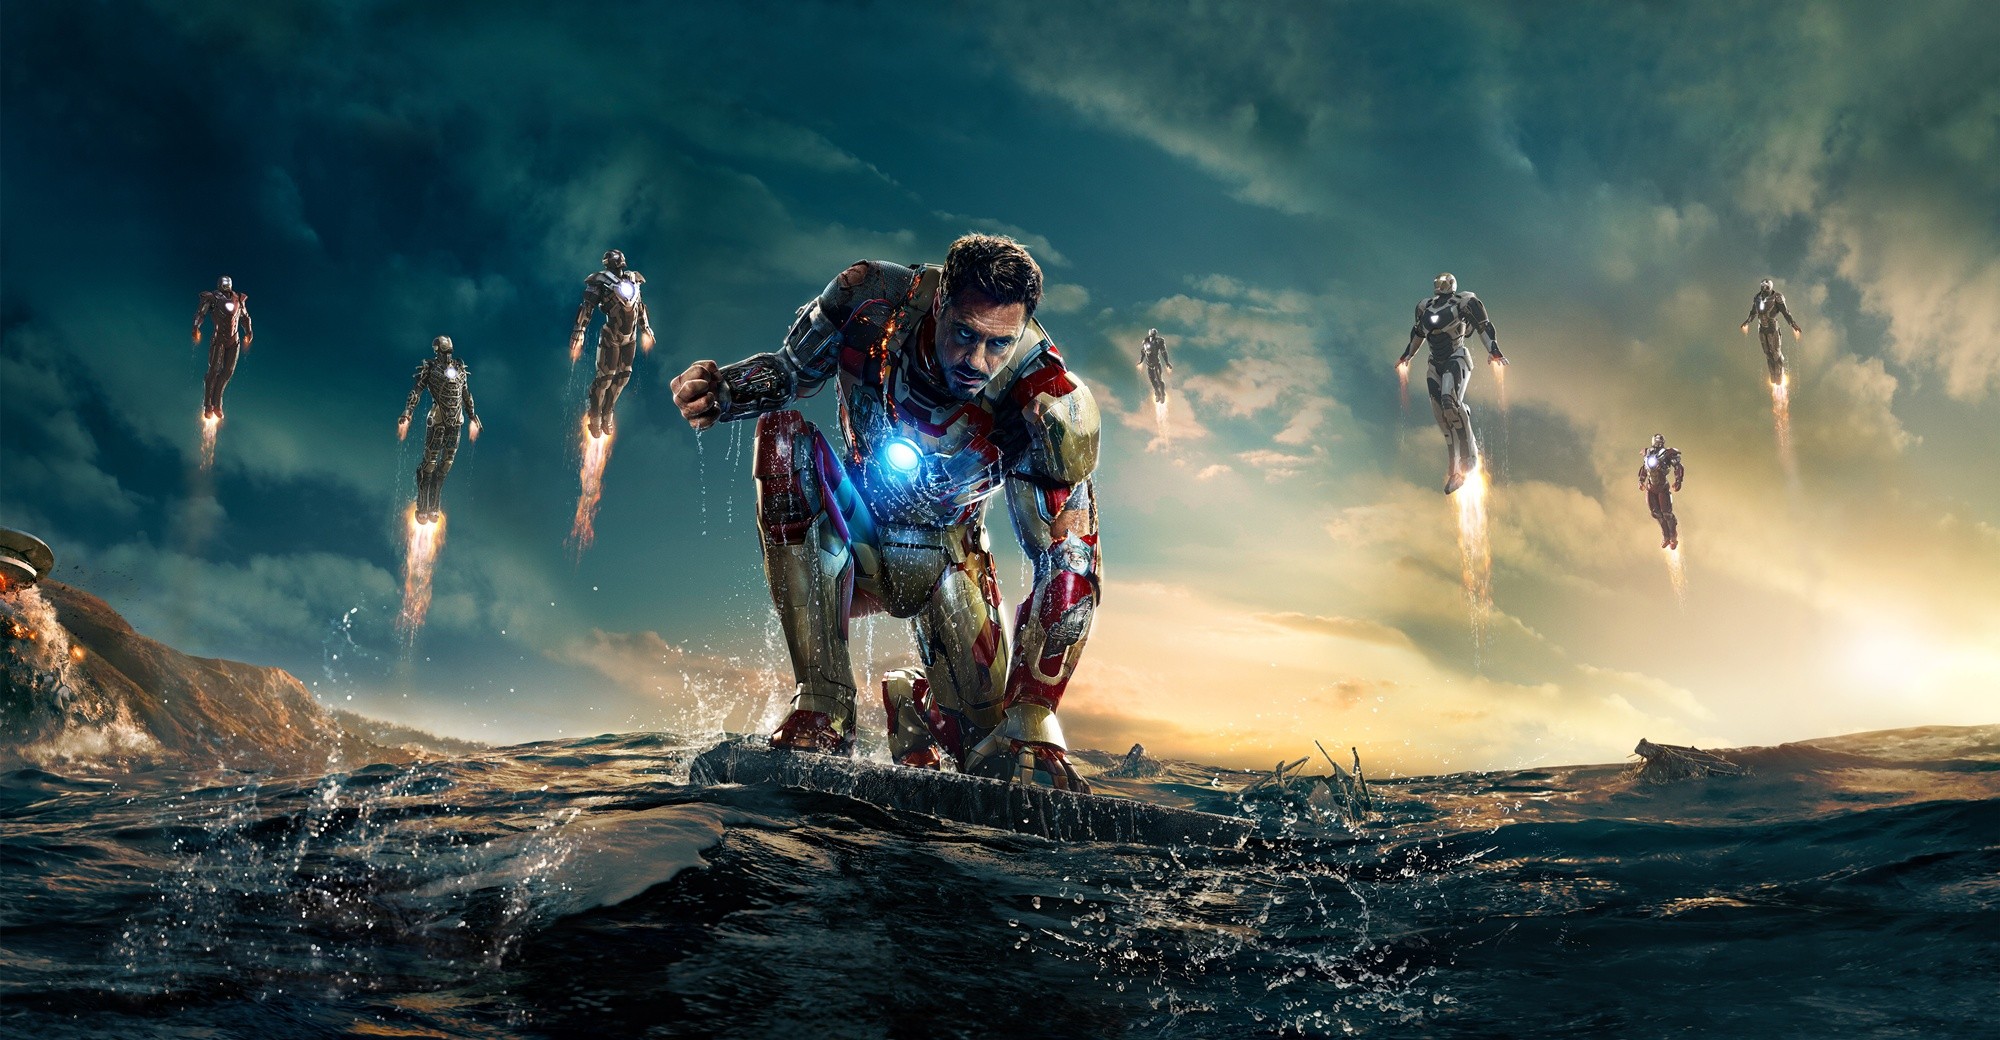 Robert Downey Jr. stars as Tony Stark/Iron Man in Walt Disney Pictures' Iron Man 3 (2013)